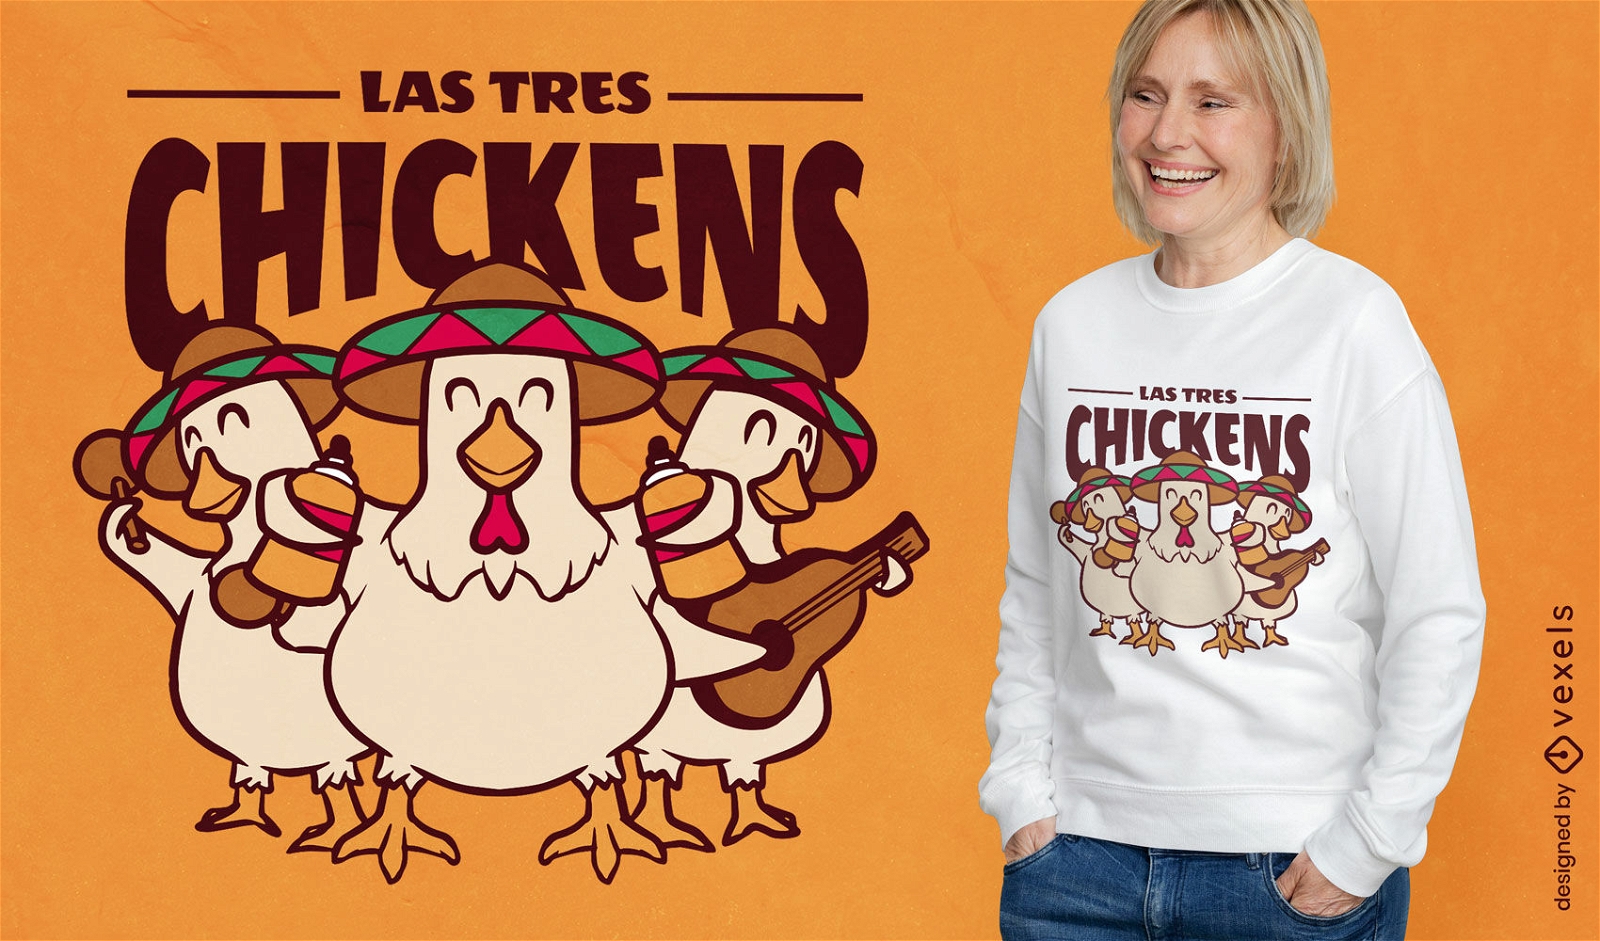 Chicken animal band funny t-shirt design